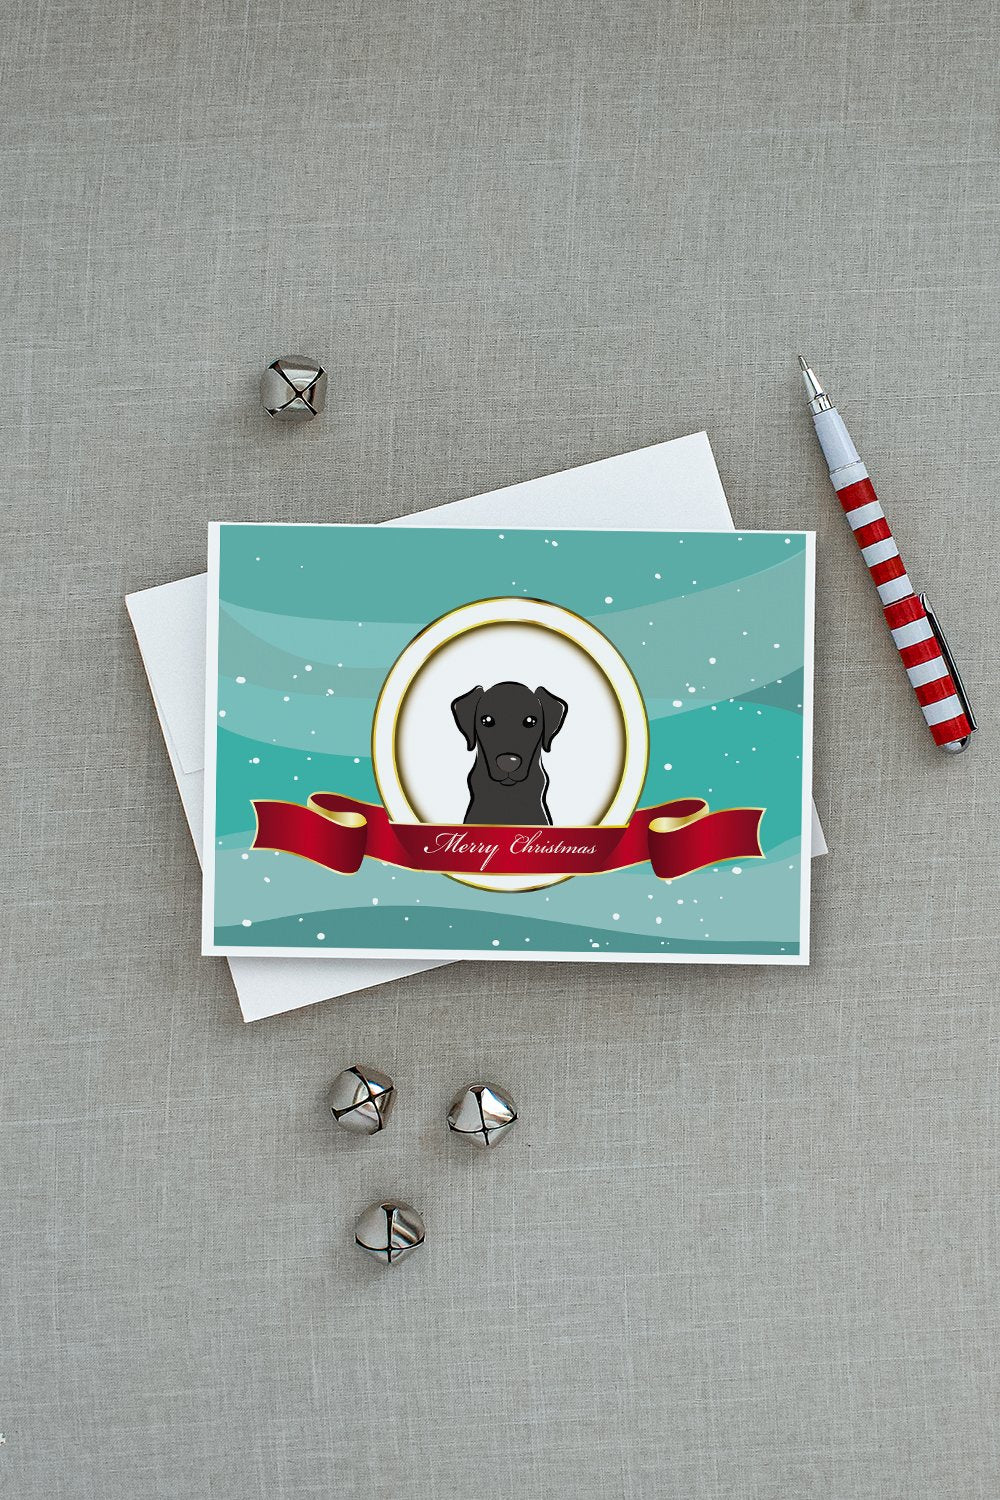 Black Labrador Merry Christmas Greeting Cards and Envelopes Pack of 8 - the-store.com